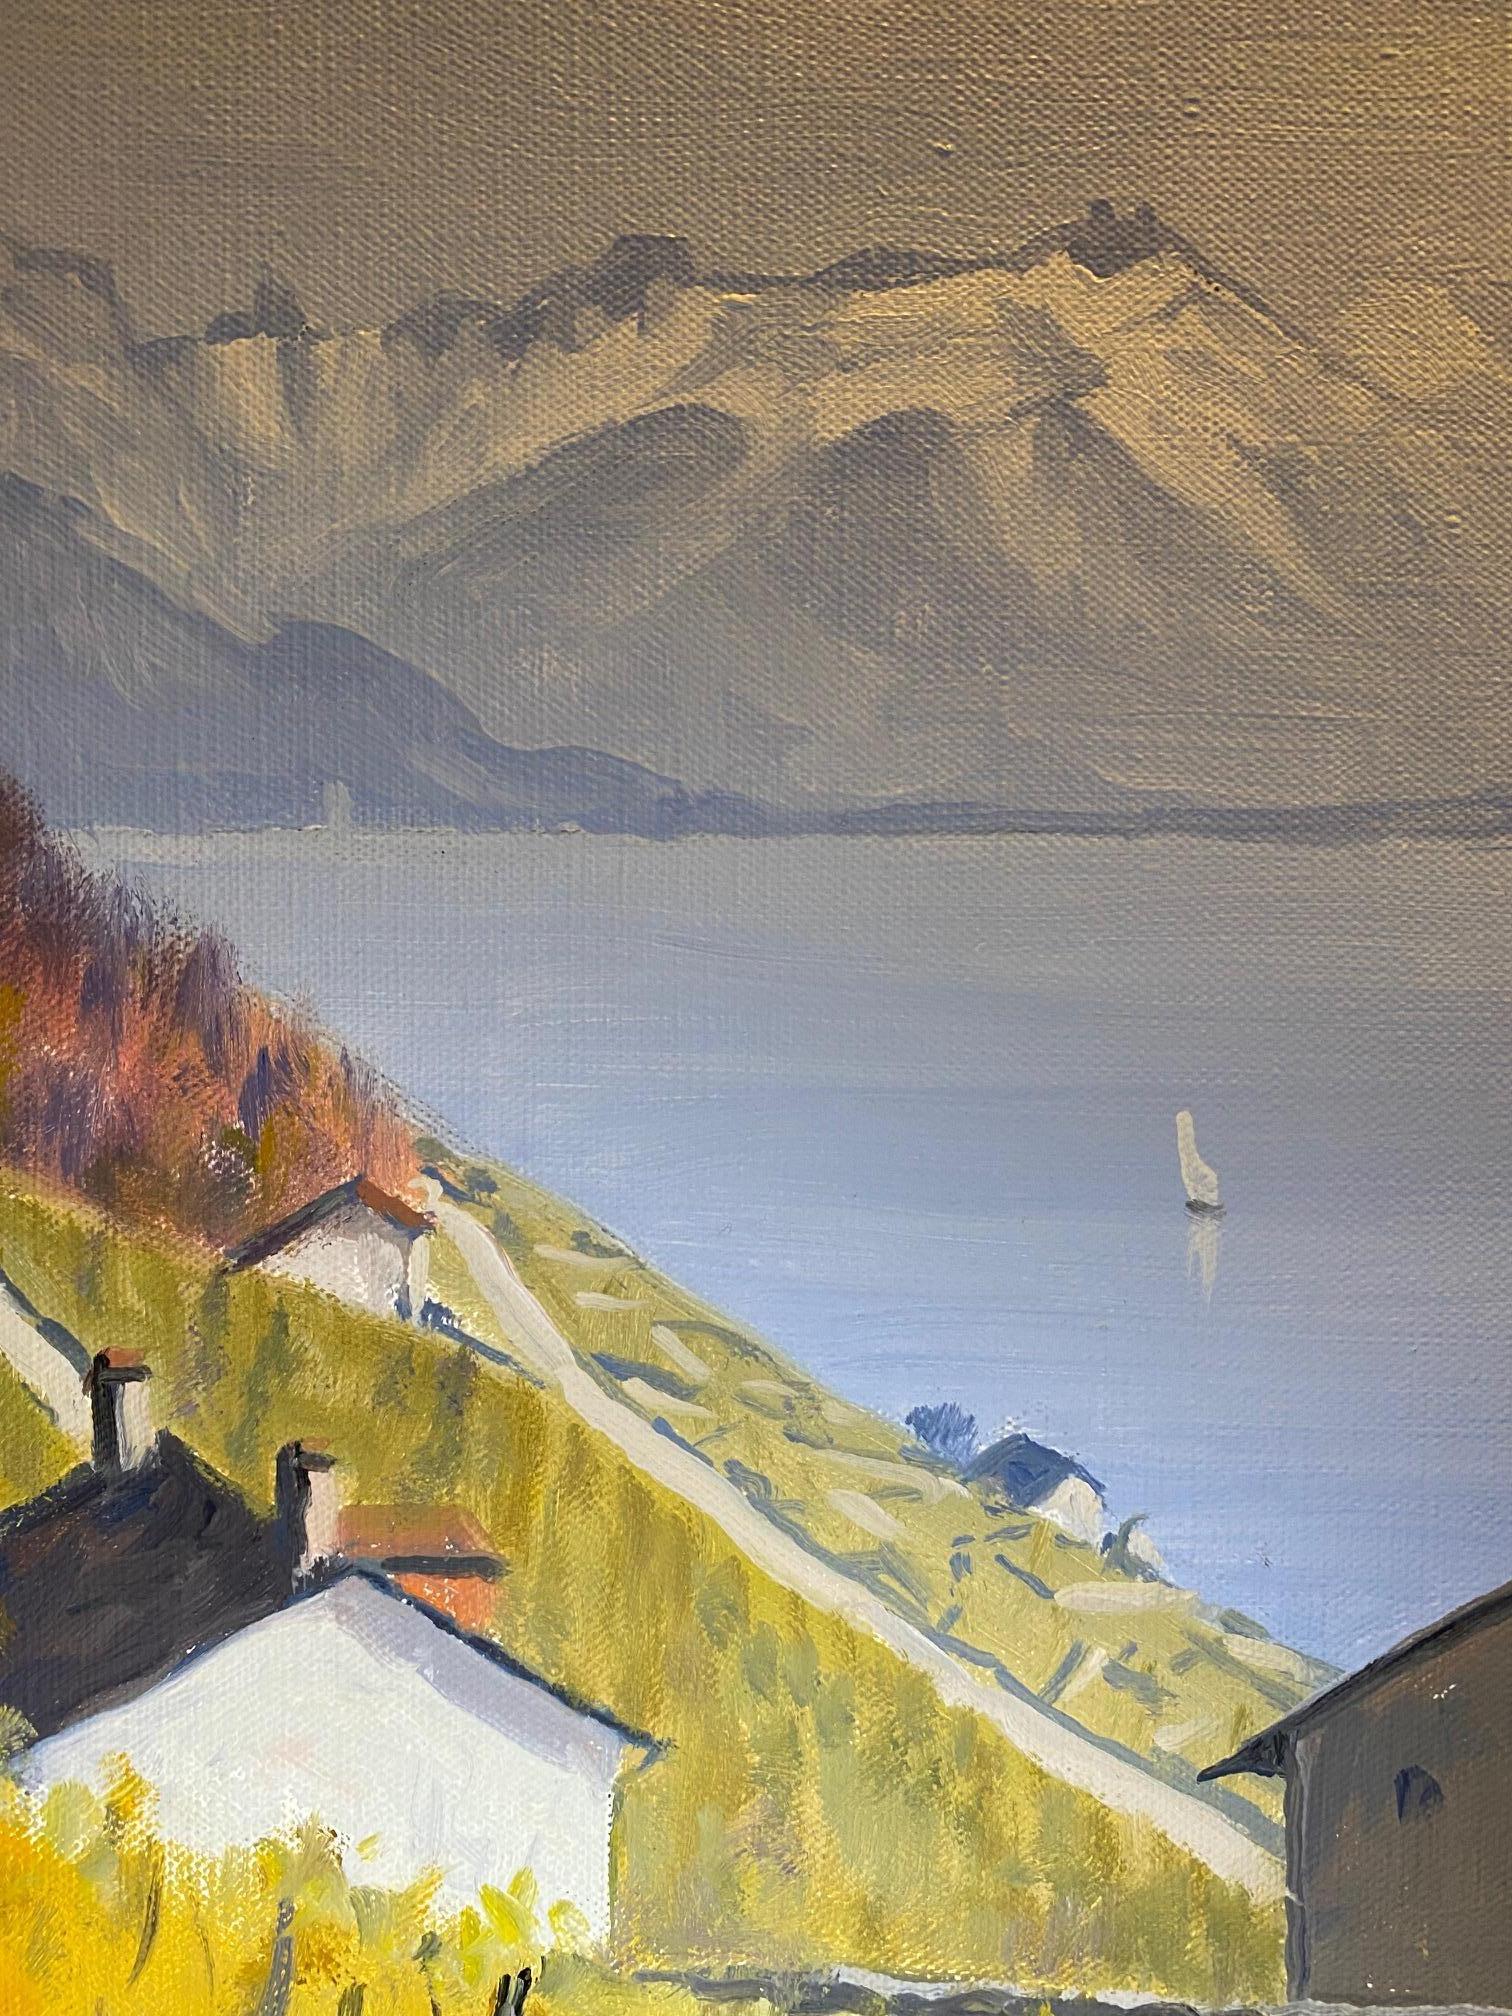 Leman Lake, Switzerland by Albert Duplain - Oil on canvas 35x41 cm 3